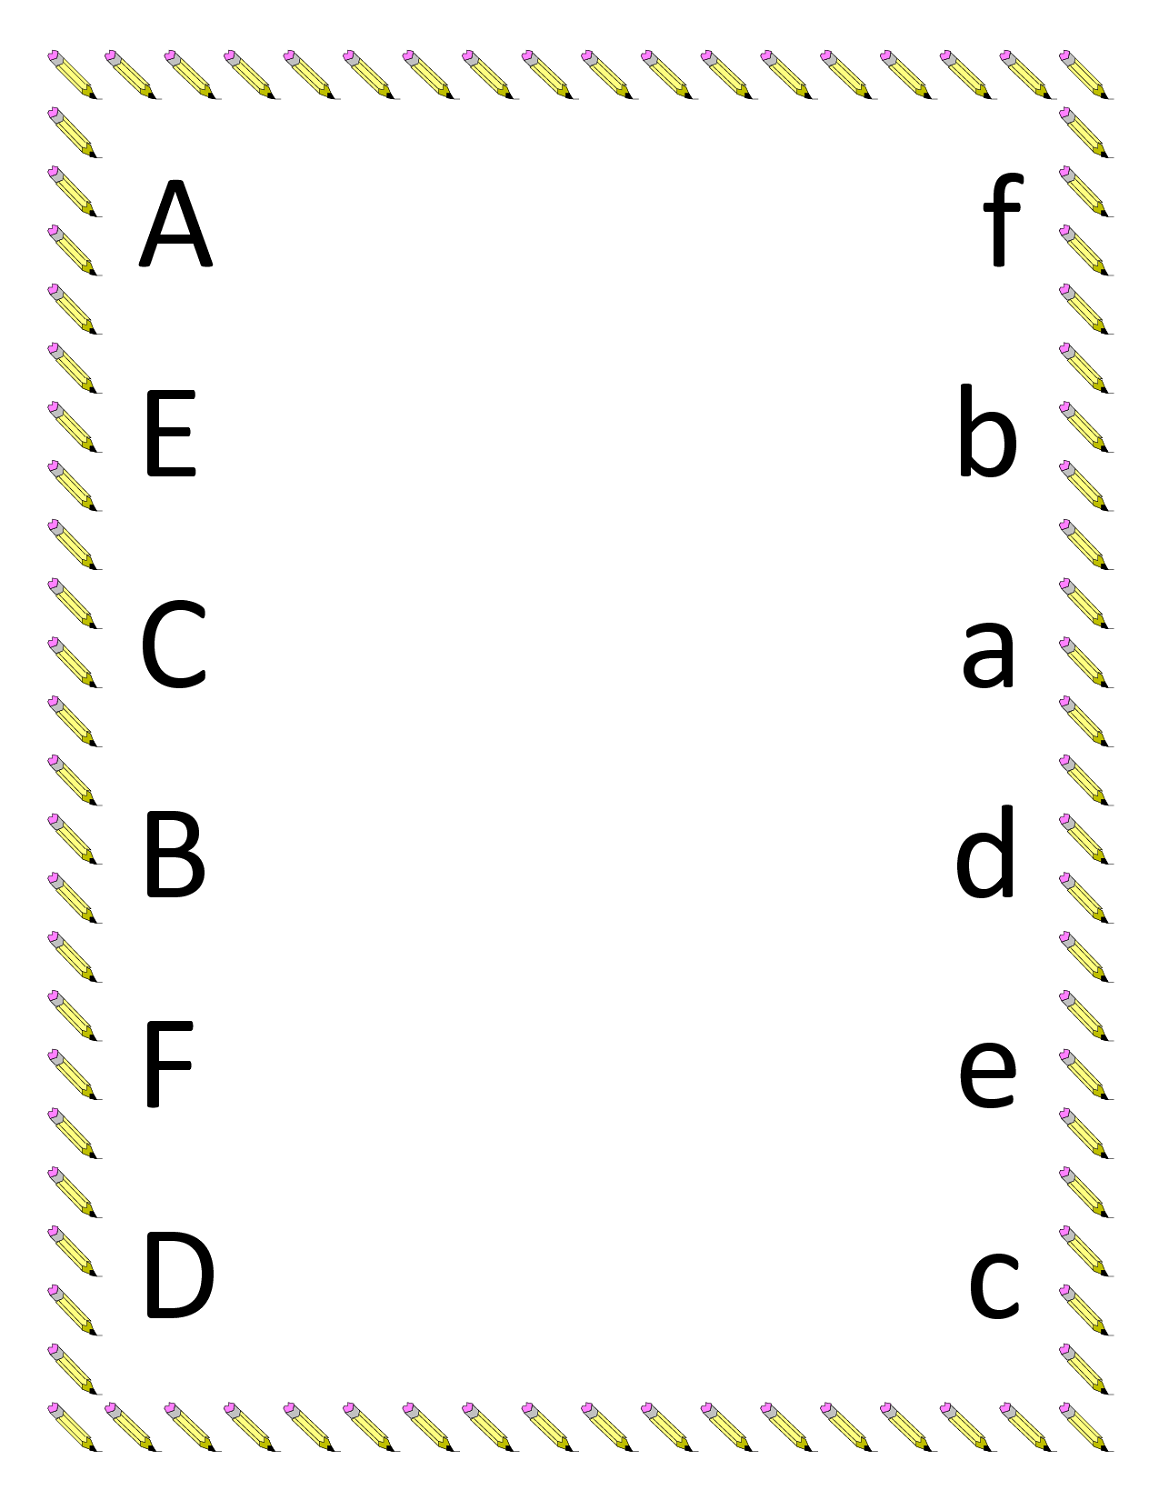 free-printable-kindergarten-alphabet-worksheets-printable-world-holiday